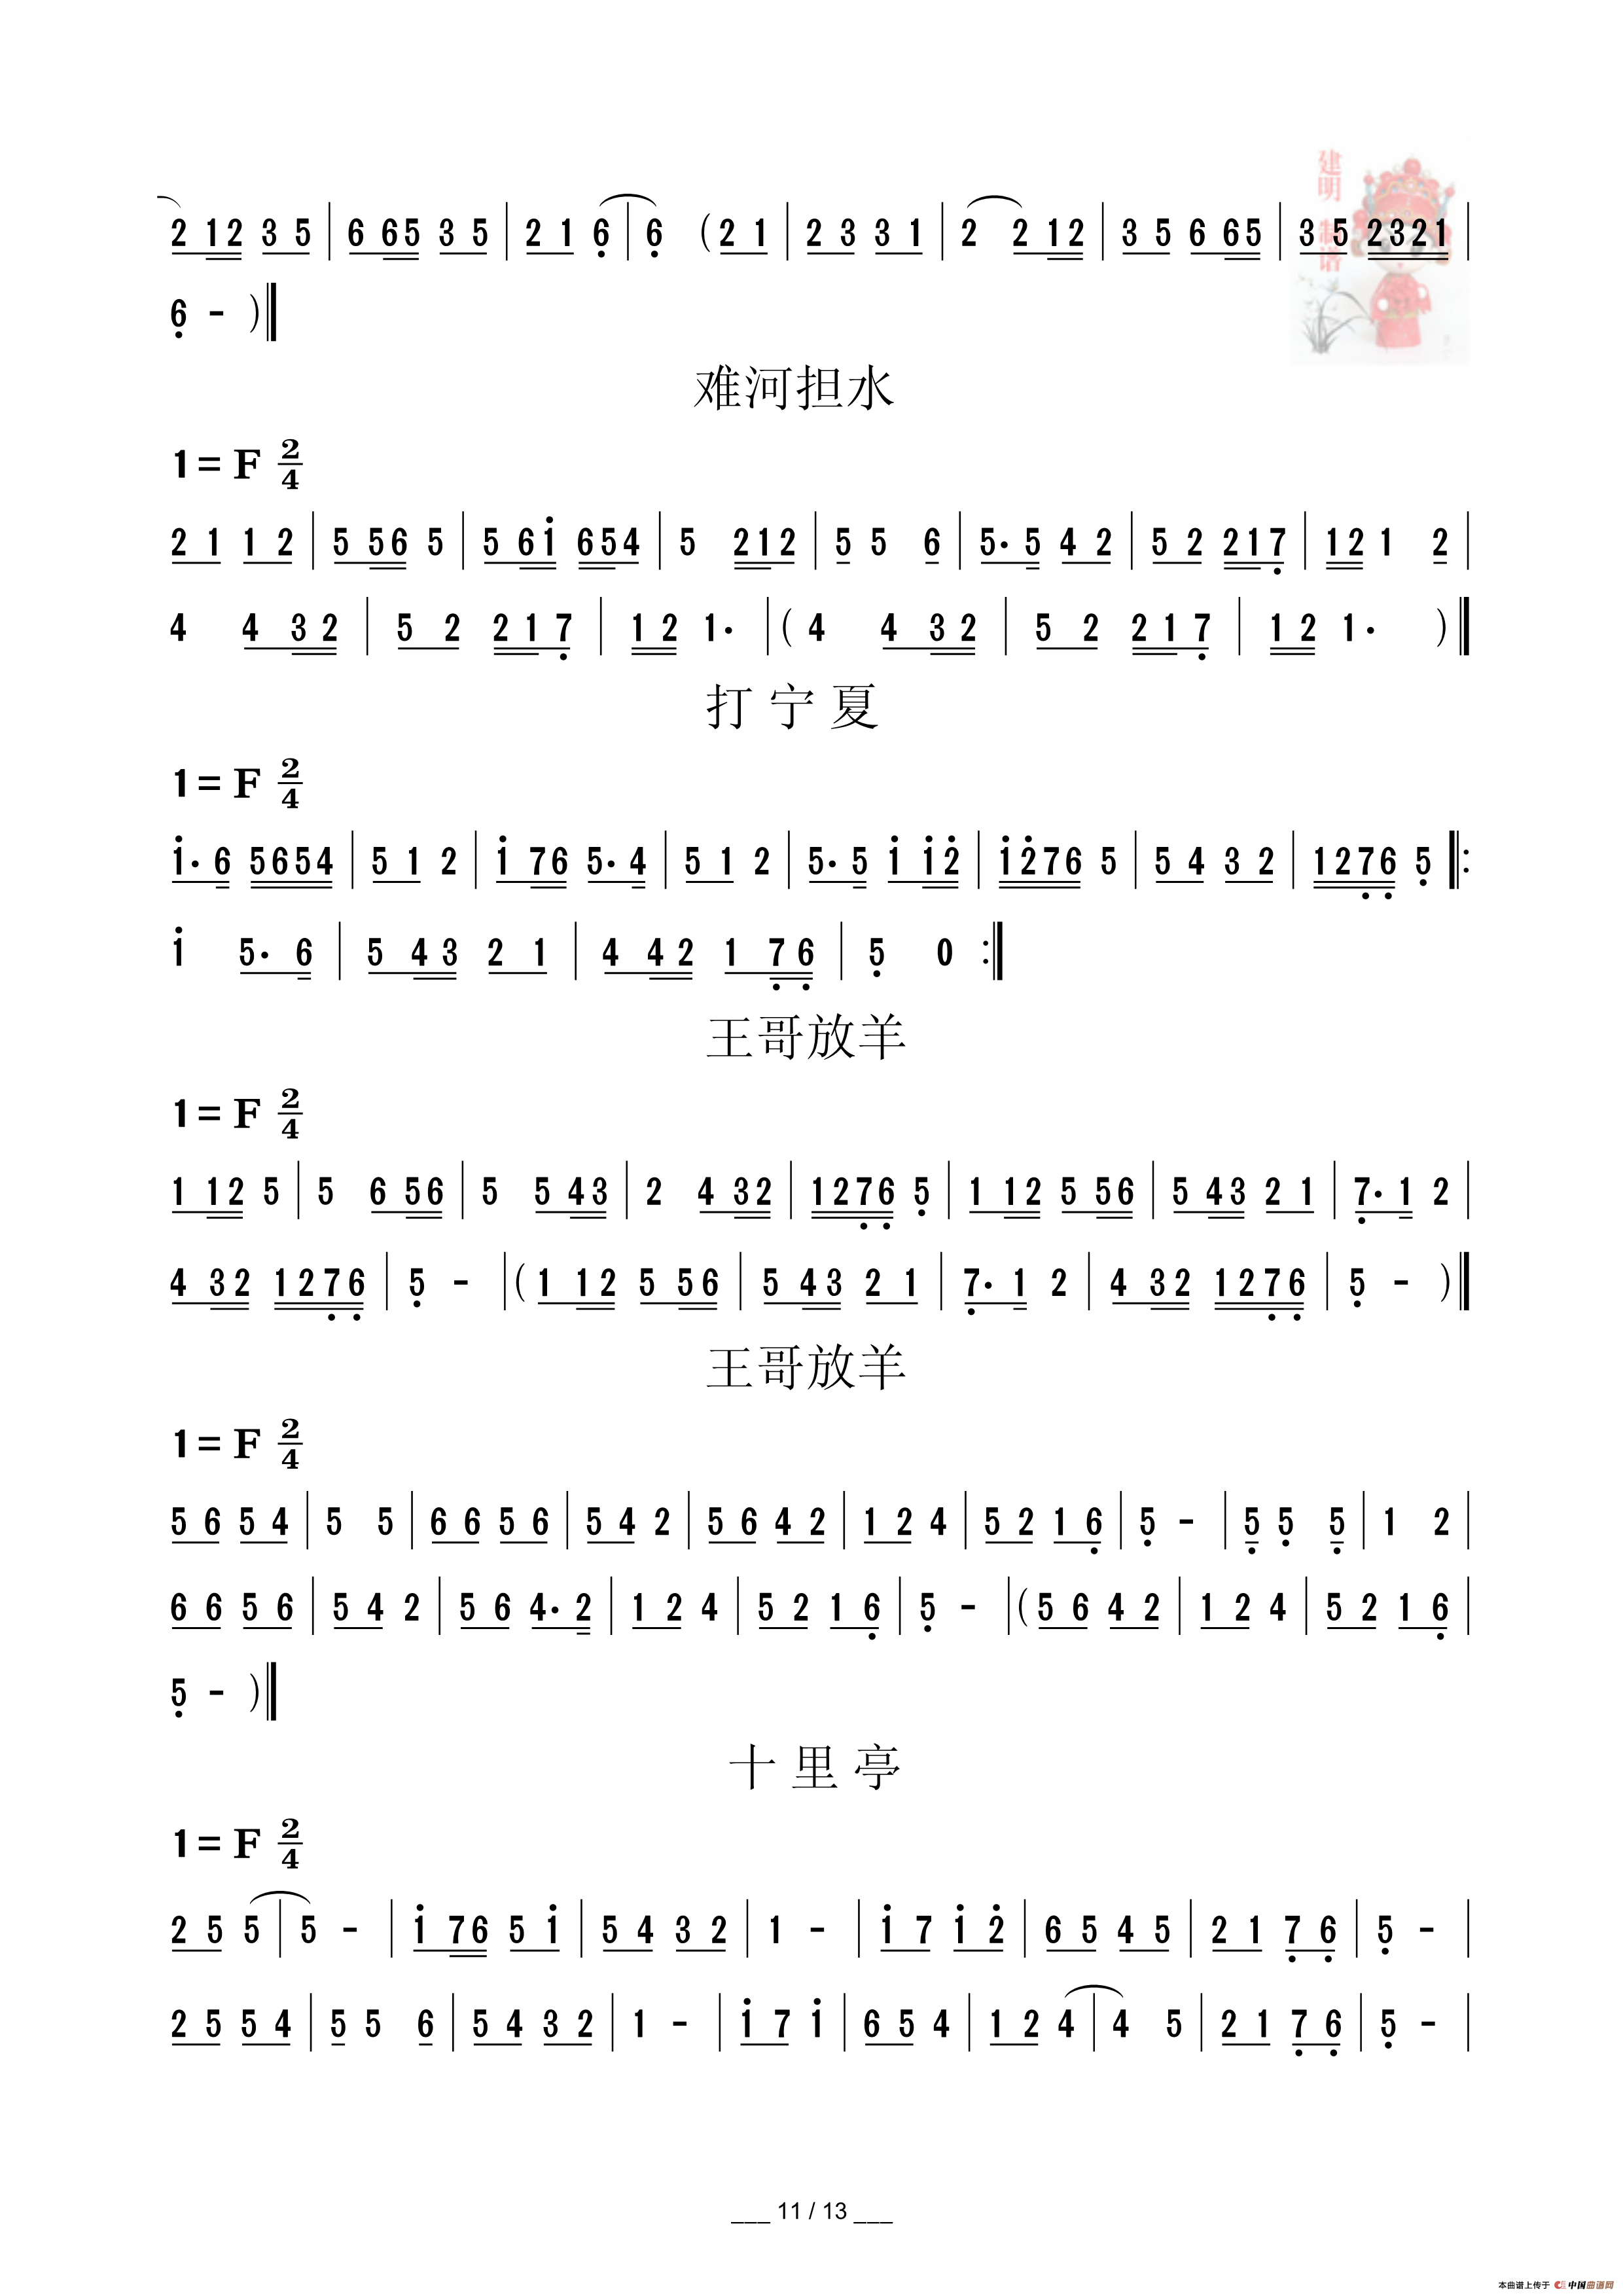 民勤小曲曲调(1)_民勤小曲曲调_Page11.png